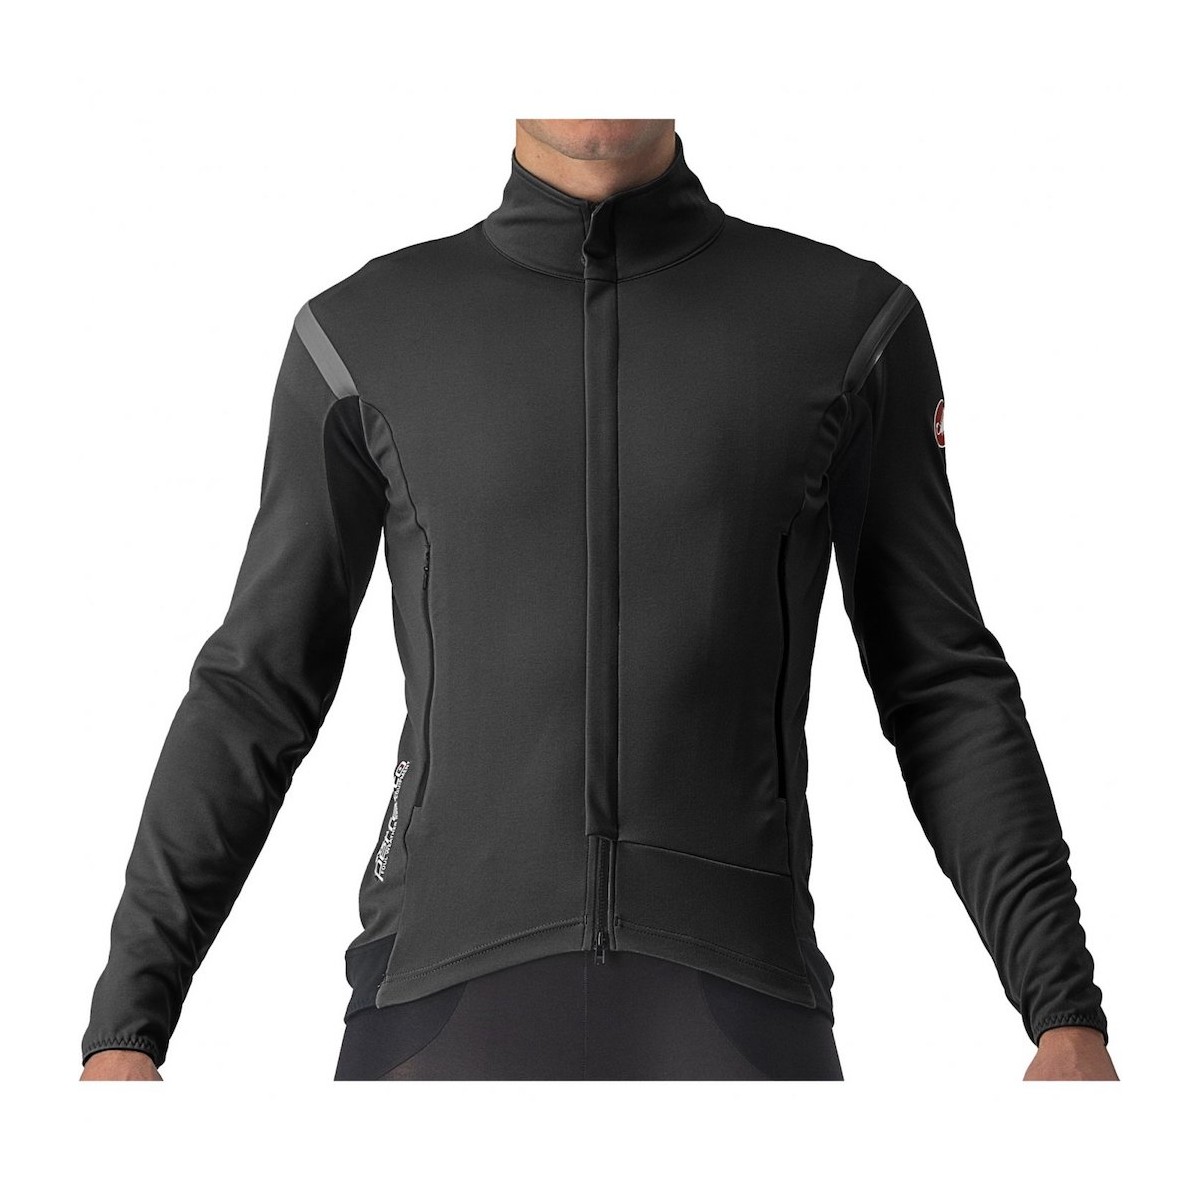 CASTELLI PERFETTO ROS 2 cycling jacket - black